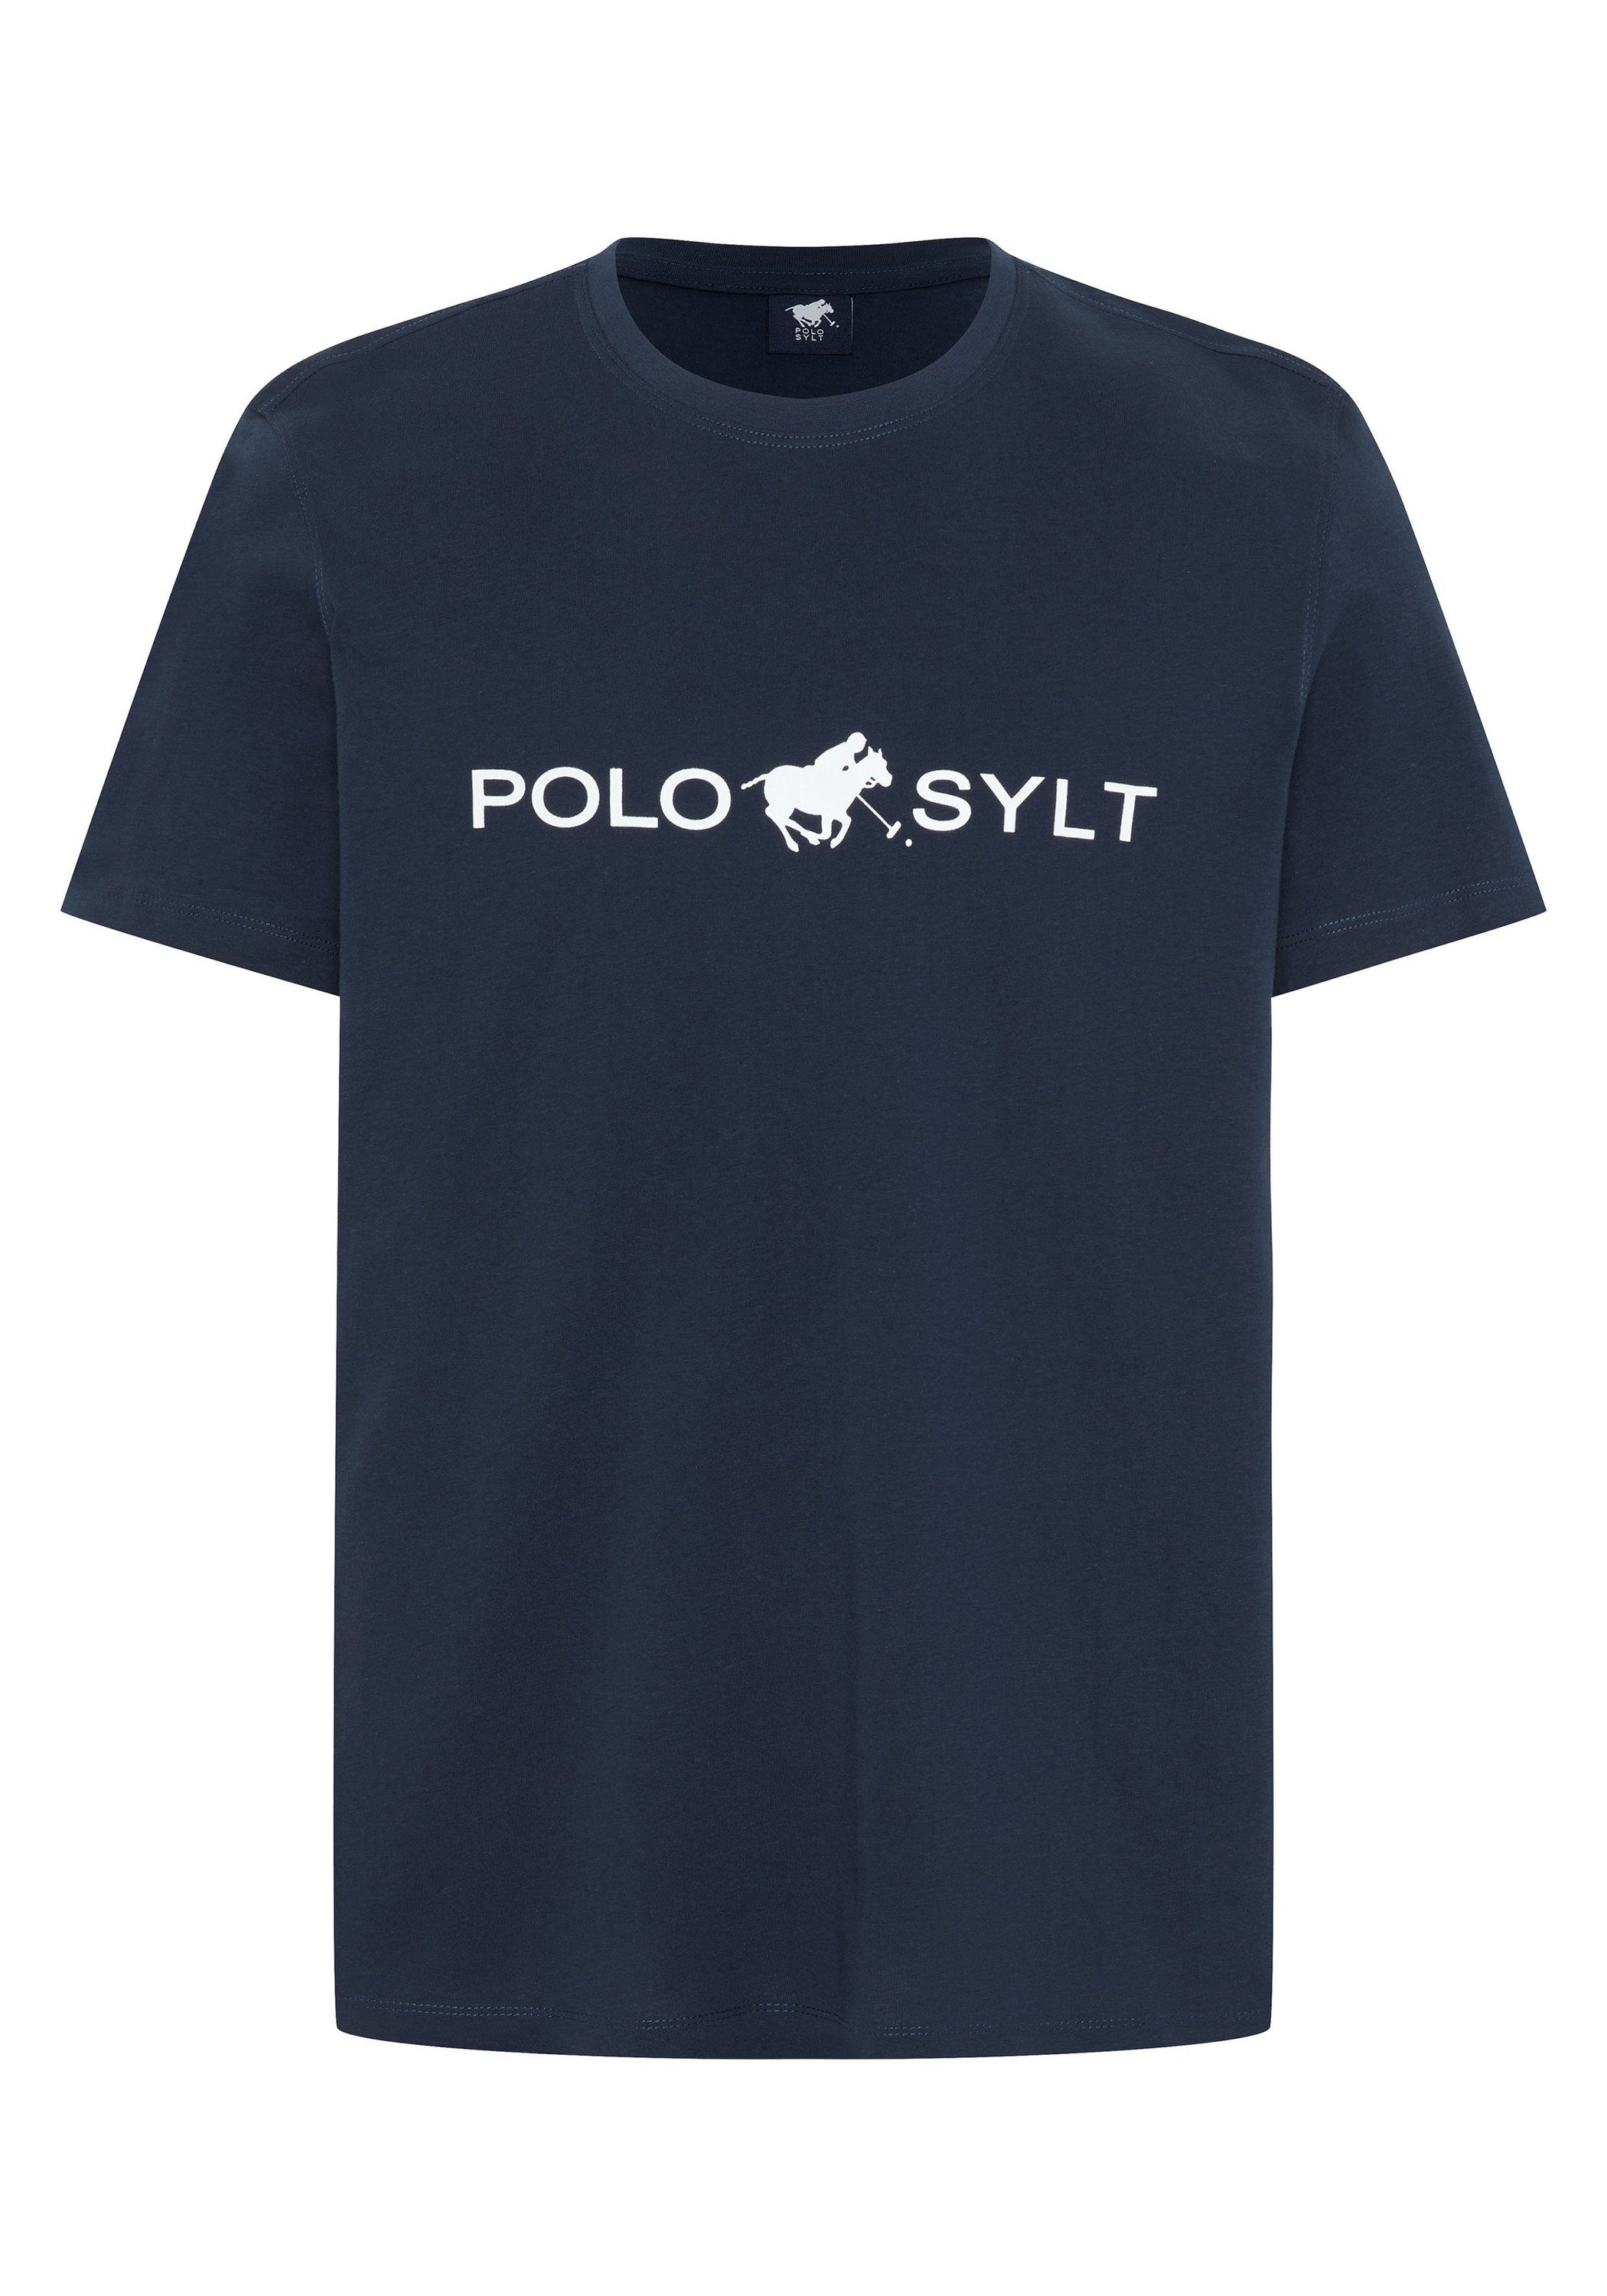 Polo Sylt Print-Shirt mit auffälligem Logo-Print 19-4010 Total Eclipse